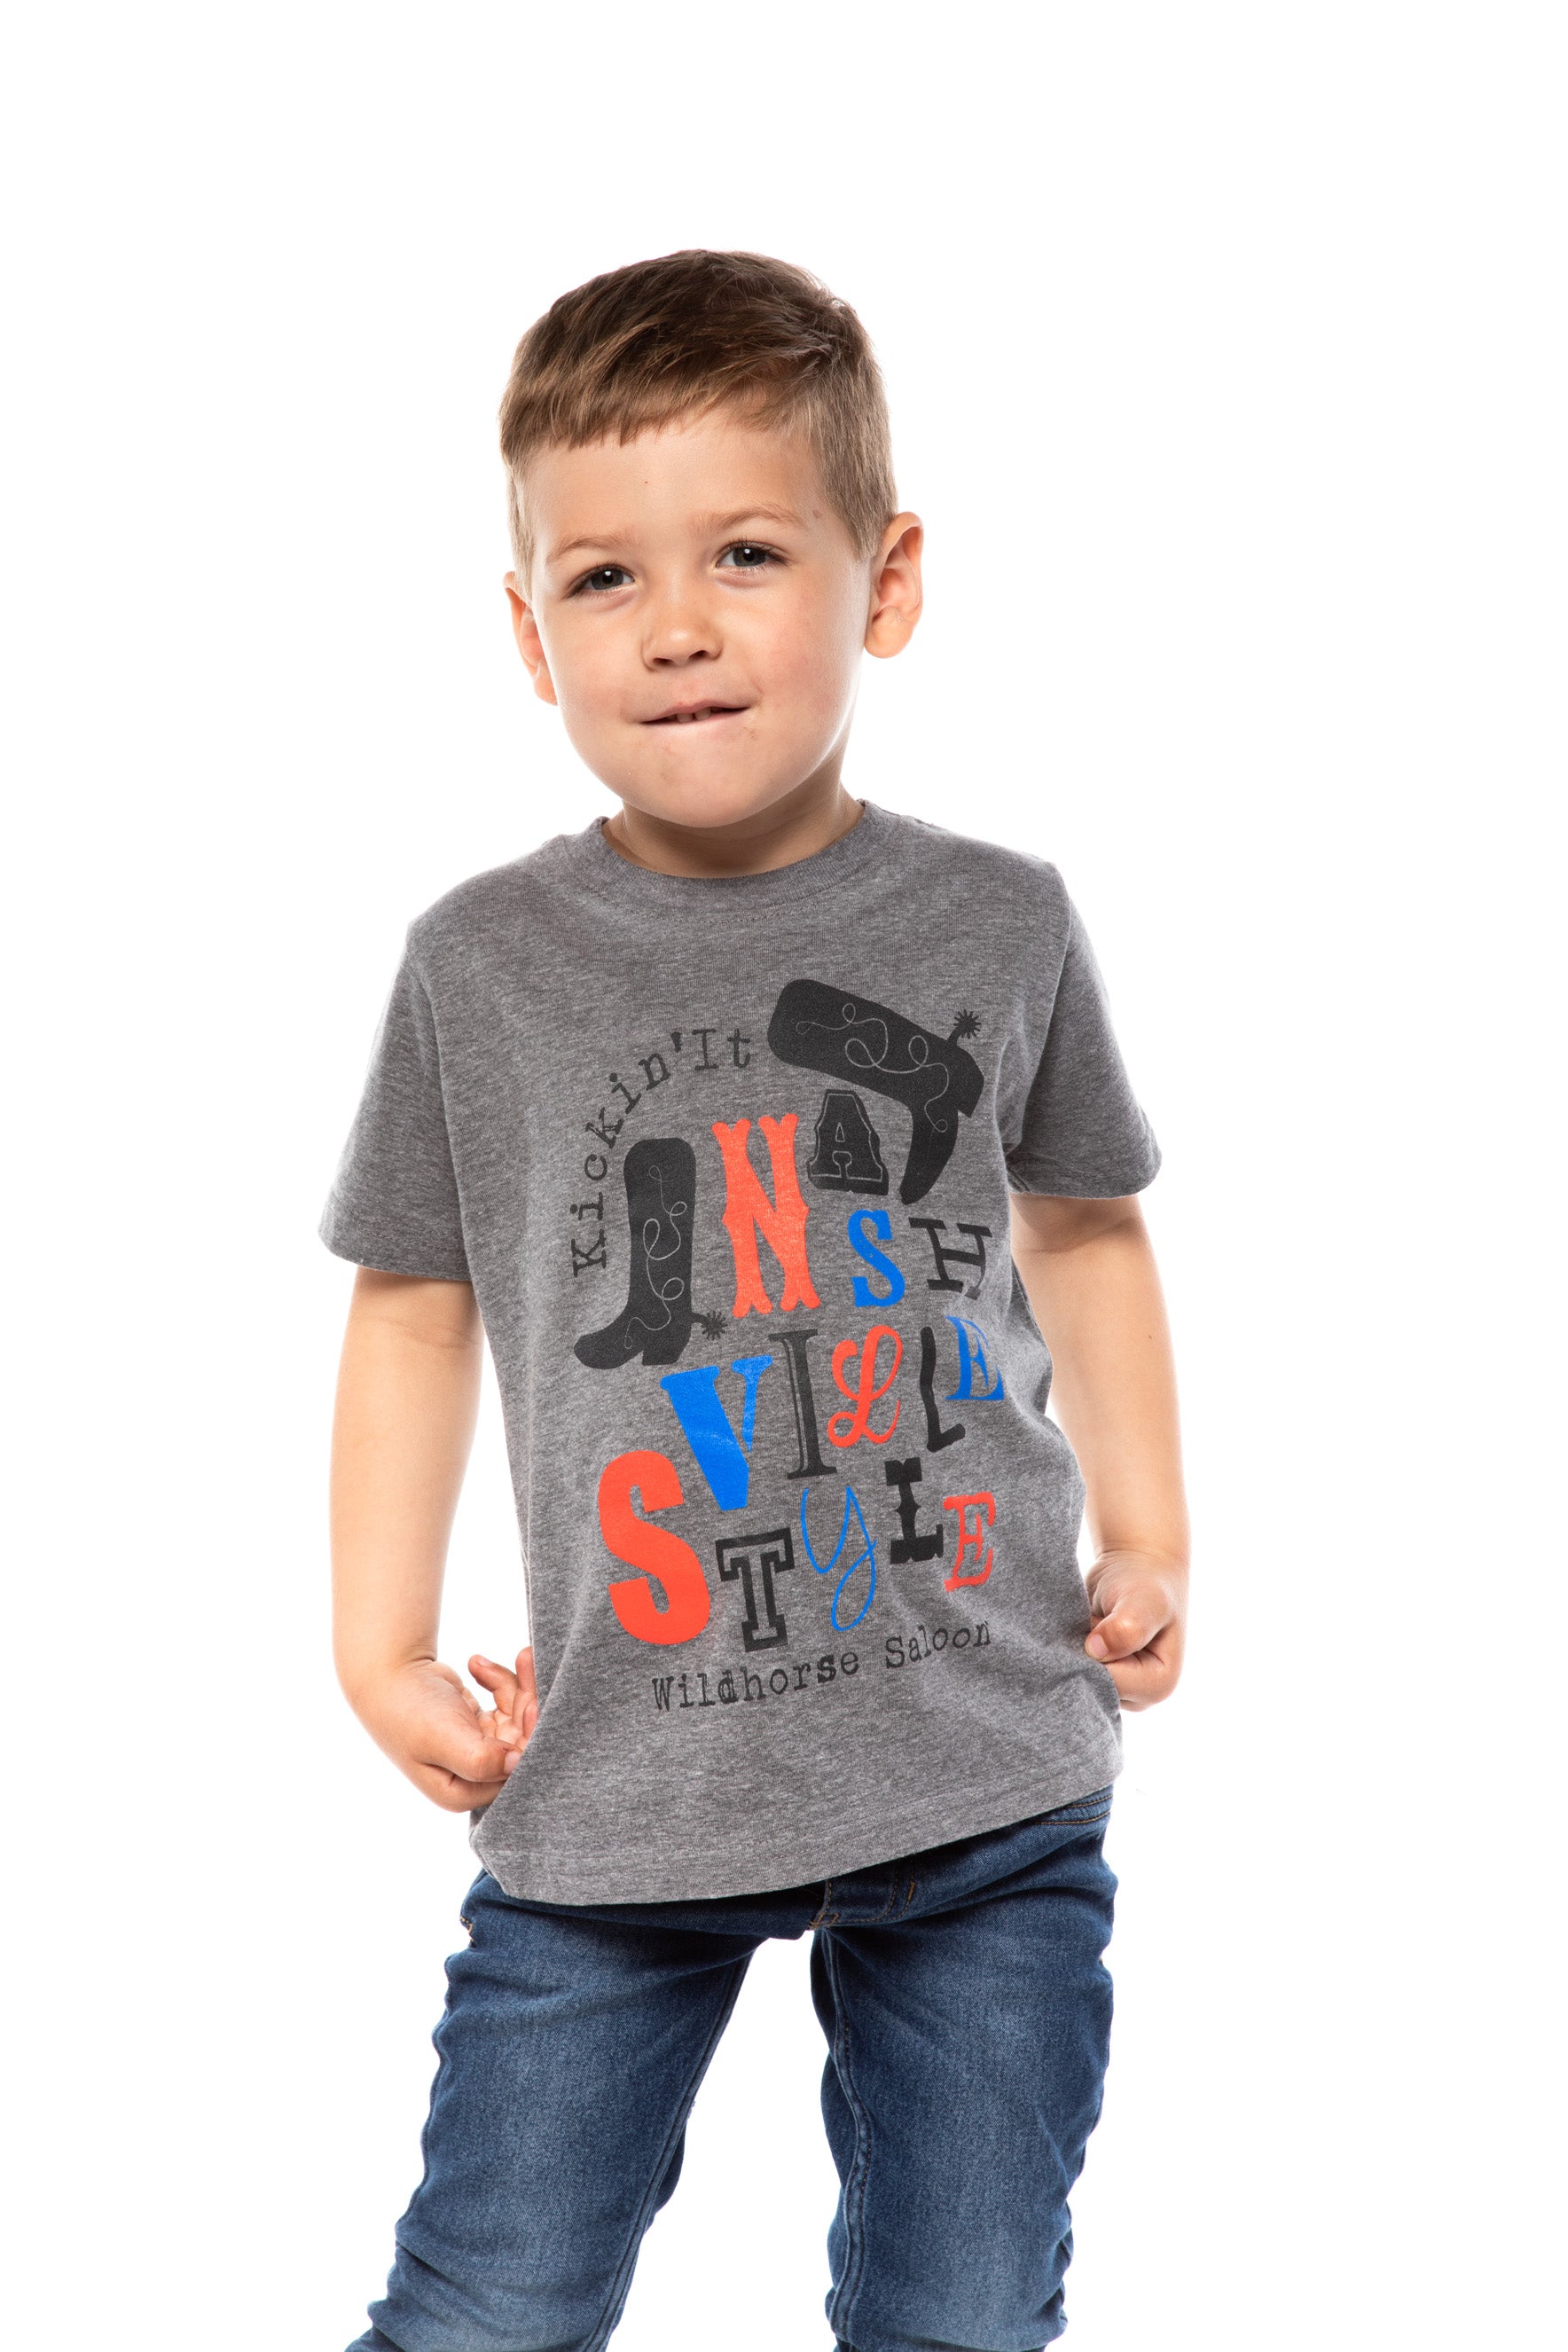 Wildhorse Toddler Nashville Kickin' It T-Shirt